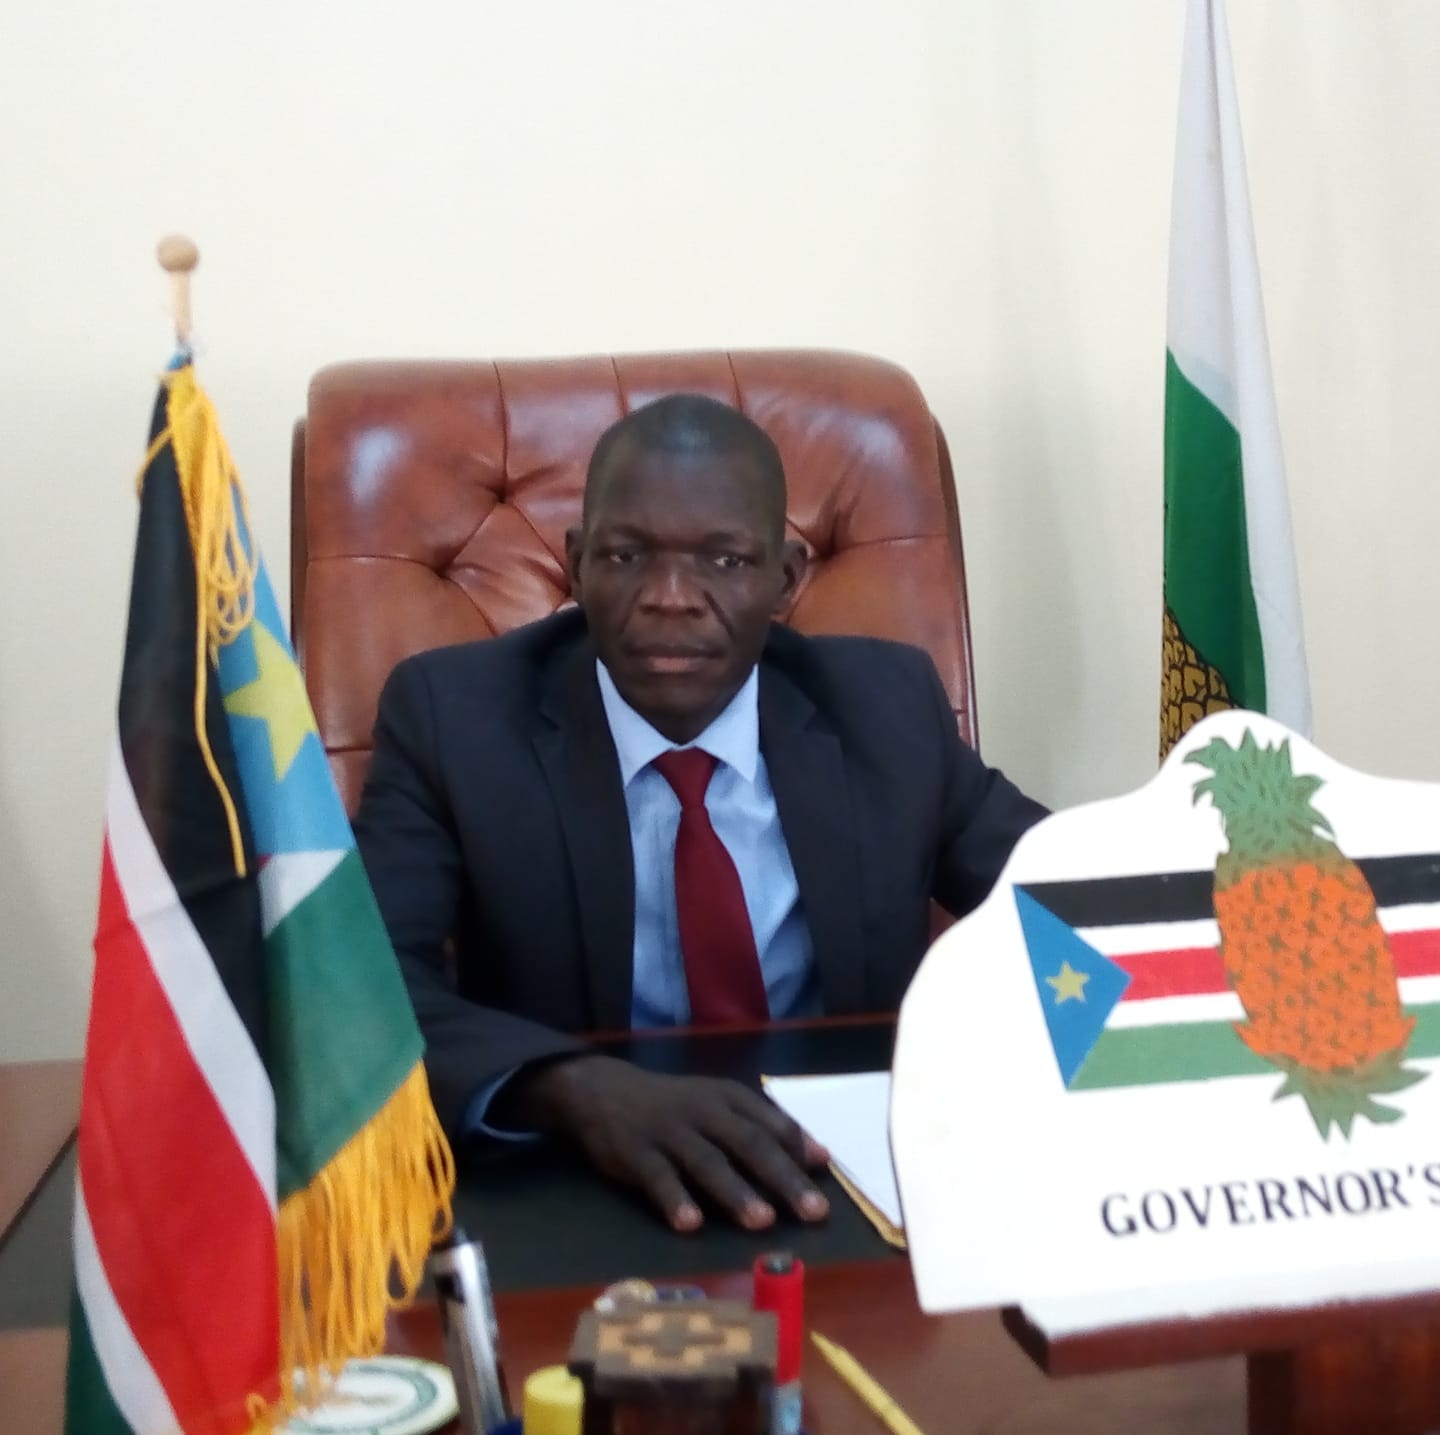 Governor Futuyo denies involvement in atrocities